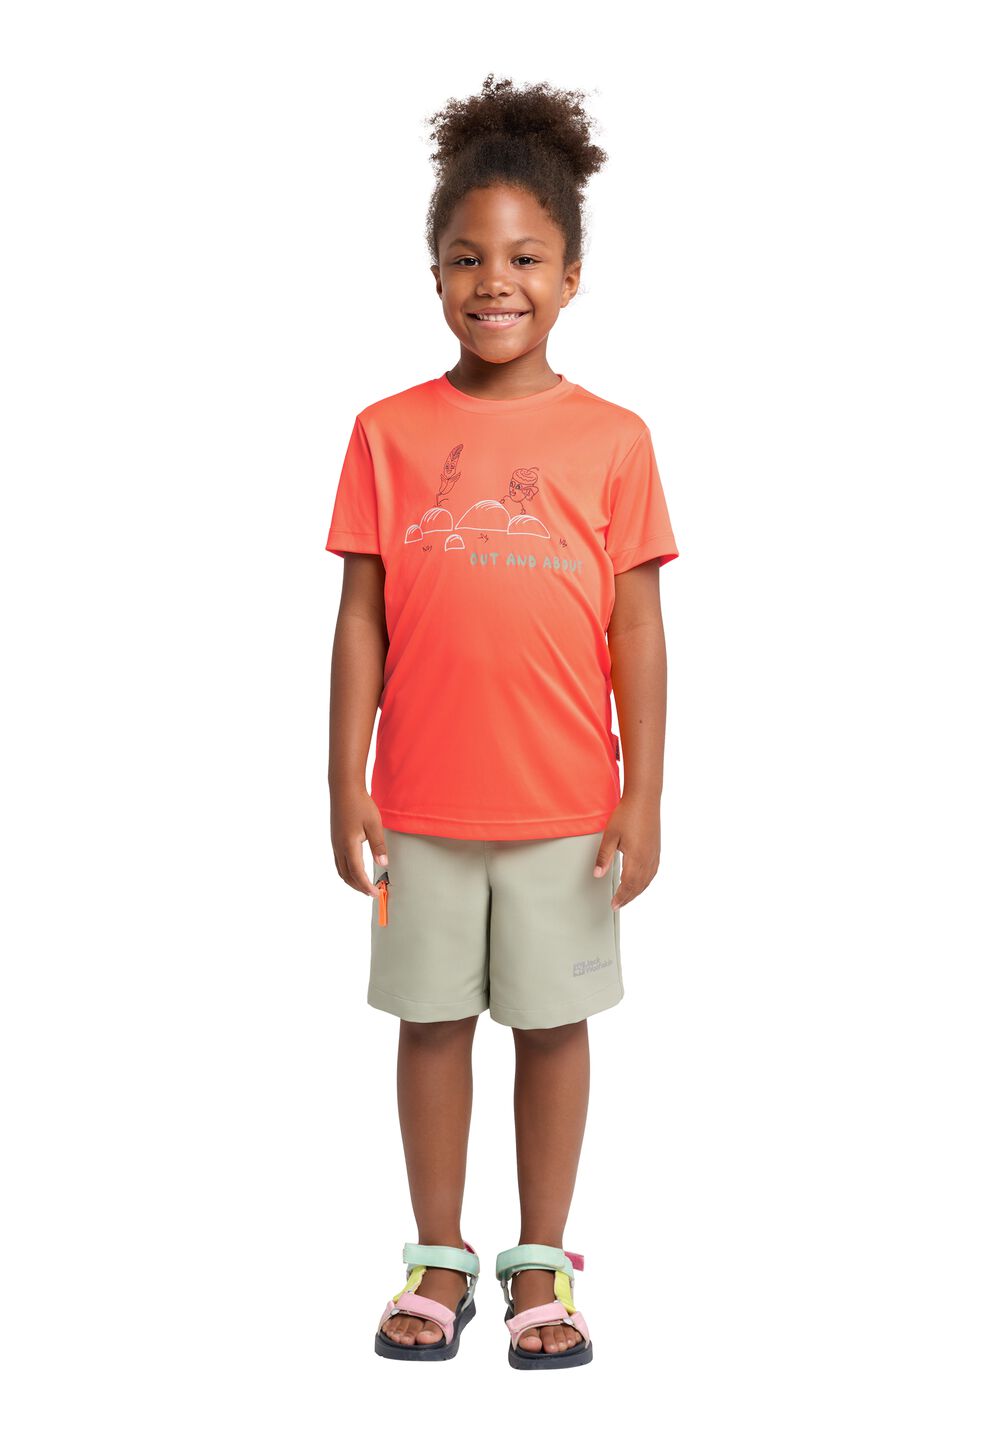 Jack Wolfskin OUT AND About T-Shirt Kids Functioneel shirt Kinderen 164 rood digital orange